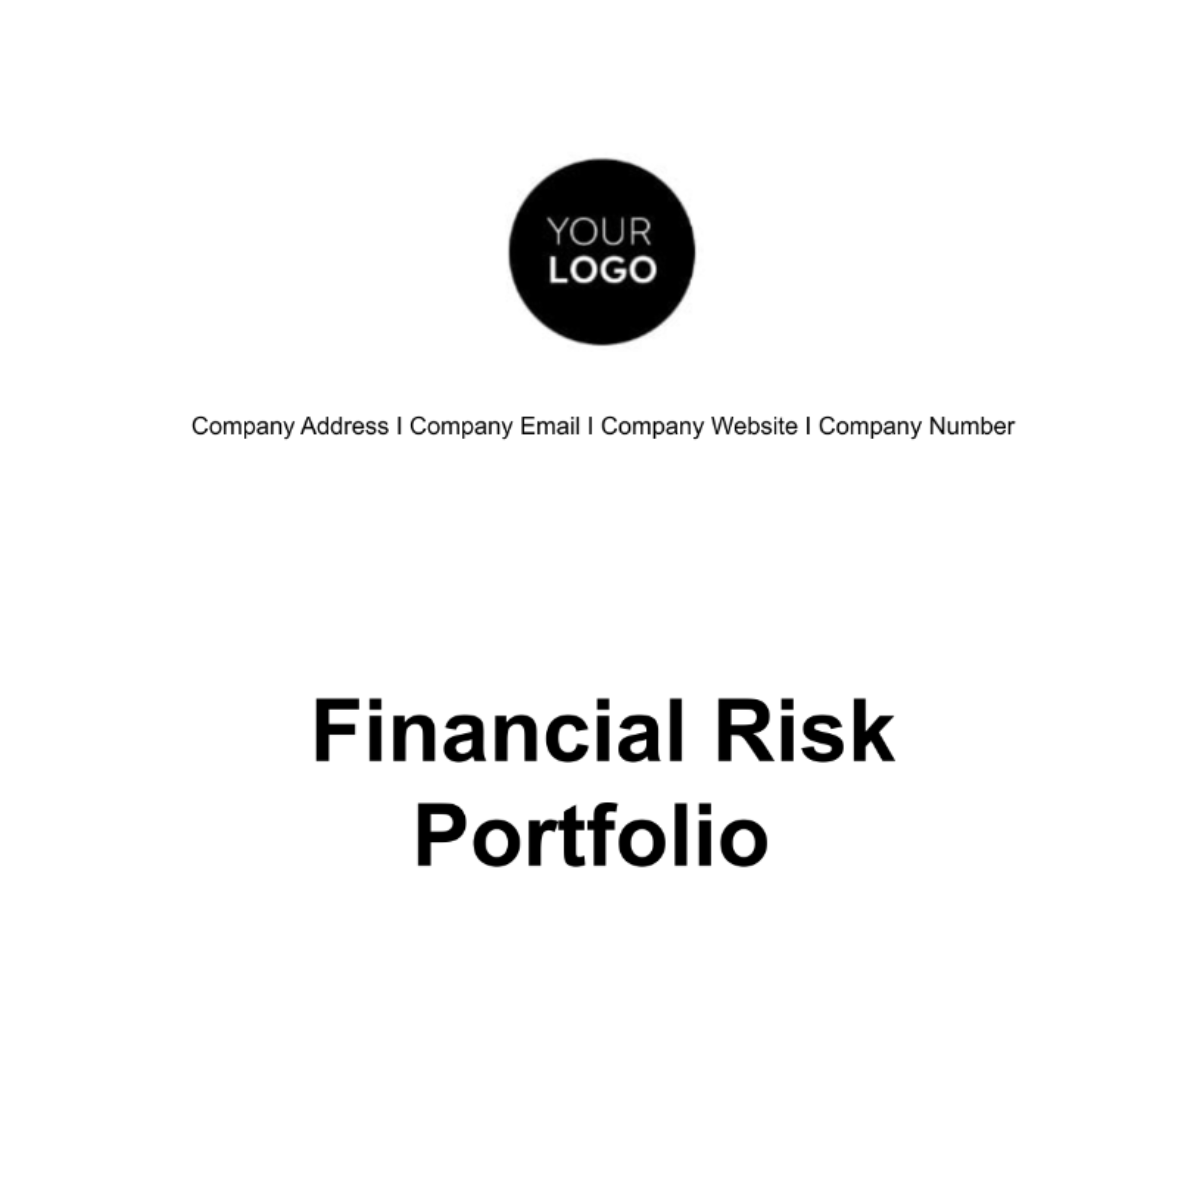 Financial Risk Portfolio Template